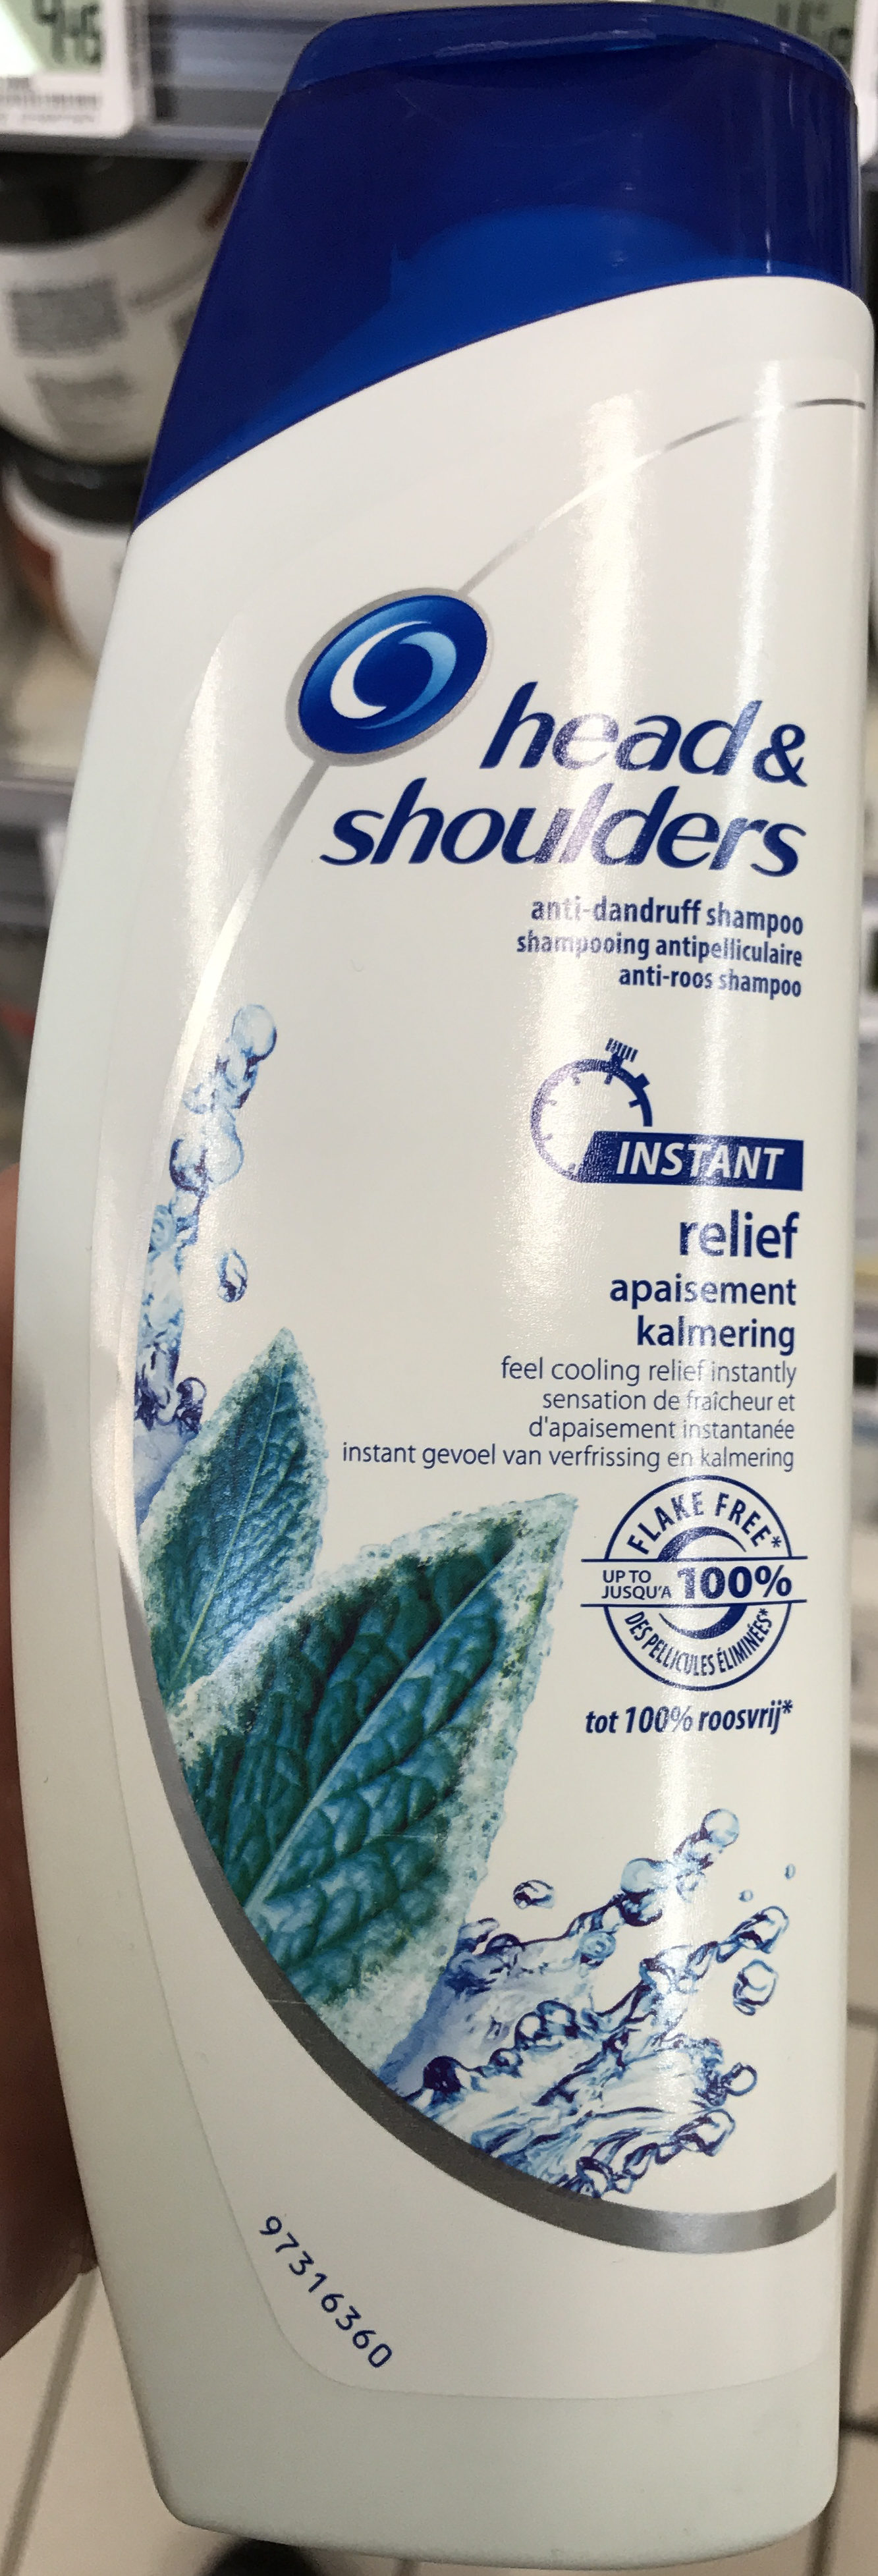 Shampooing antipelliculaire Instant Relief Apaisement - Produit - fr